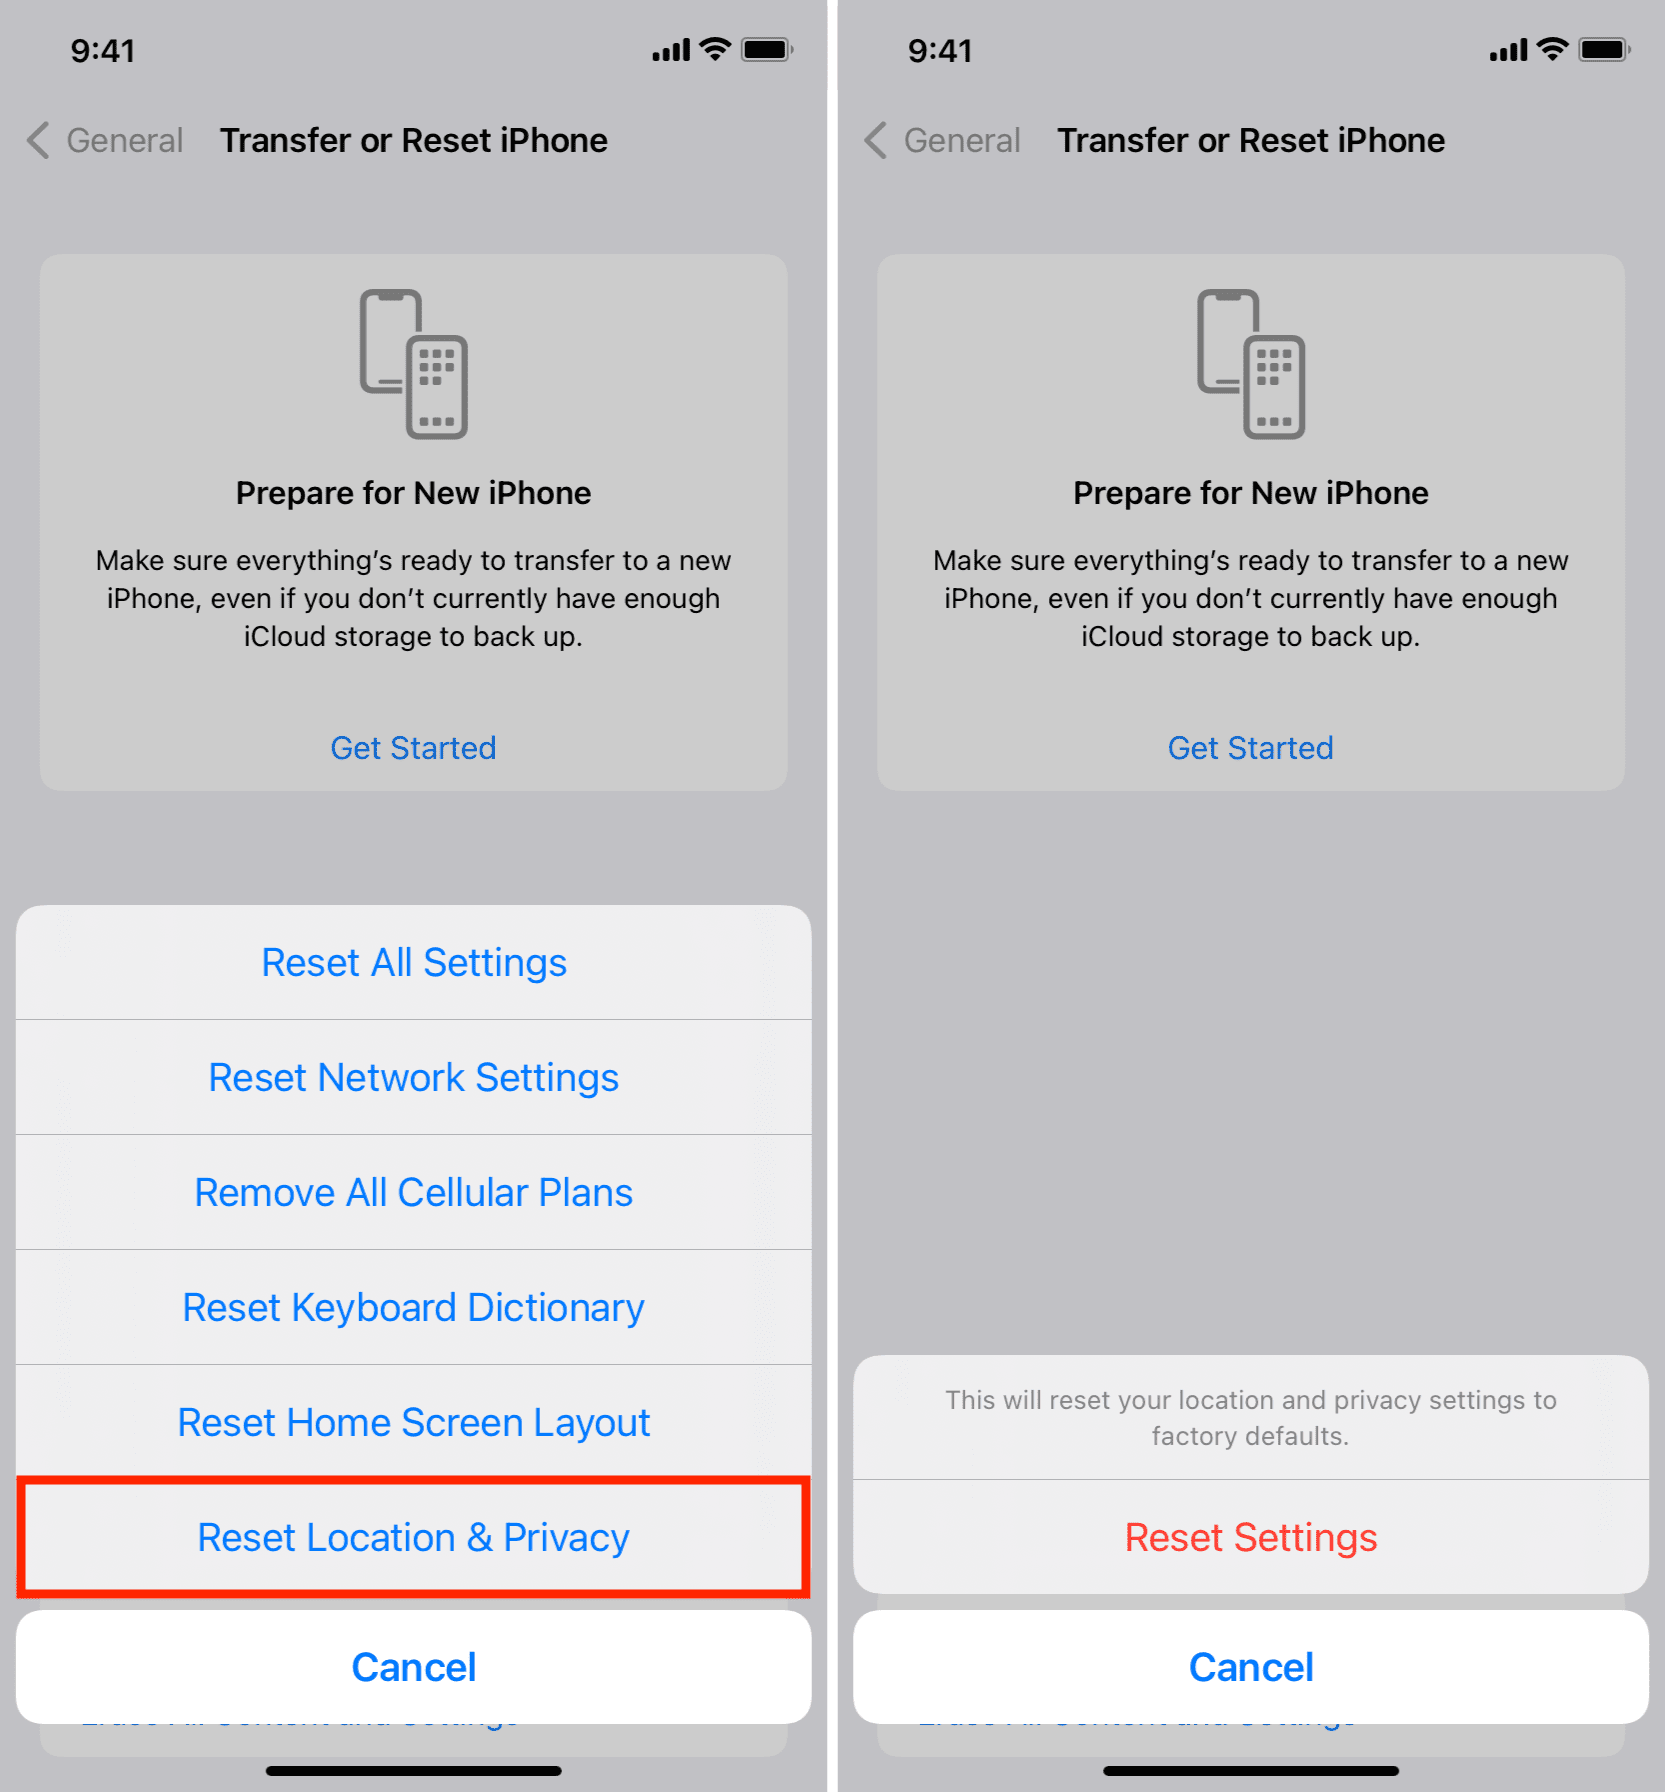 How do I reset location settings on iOS?